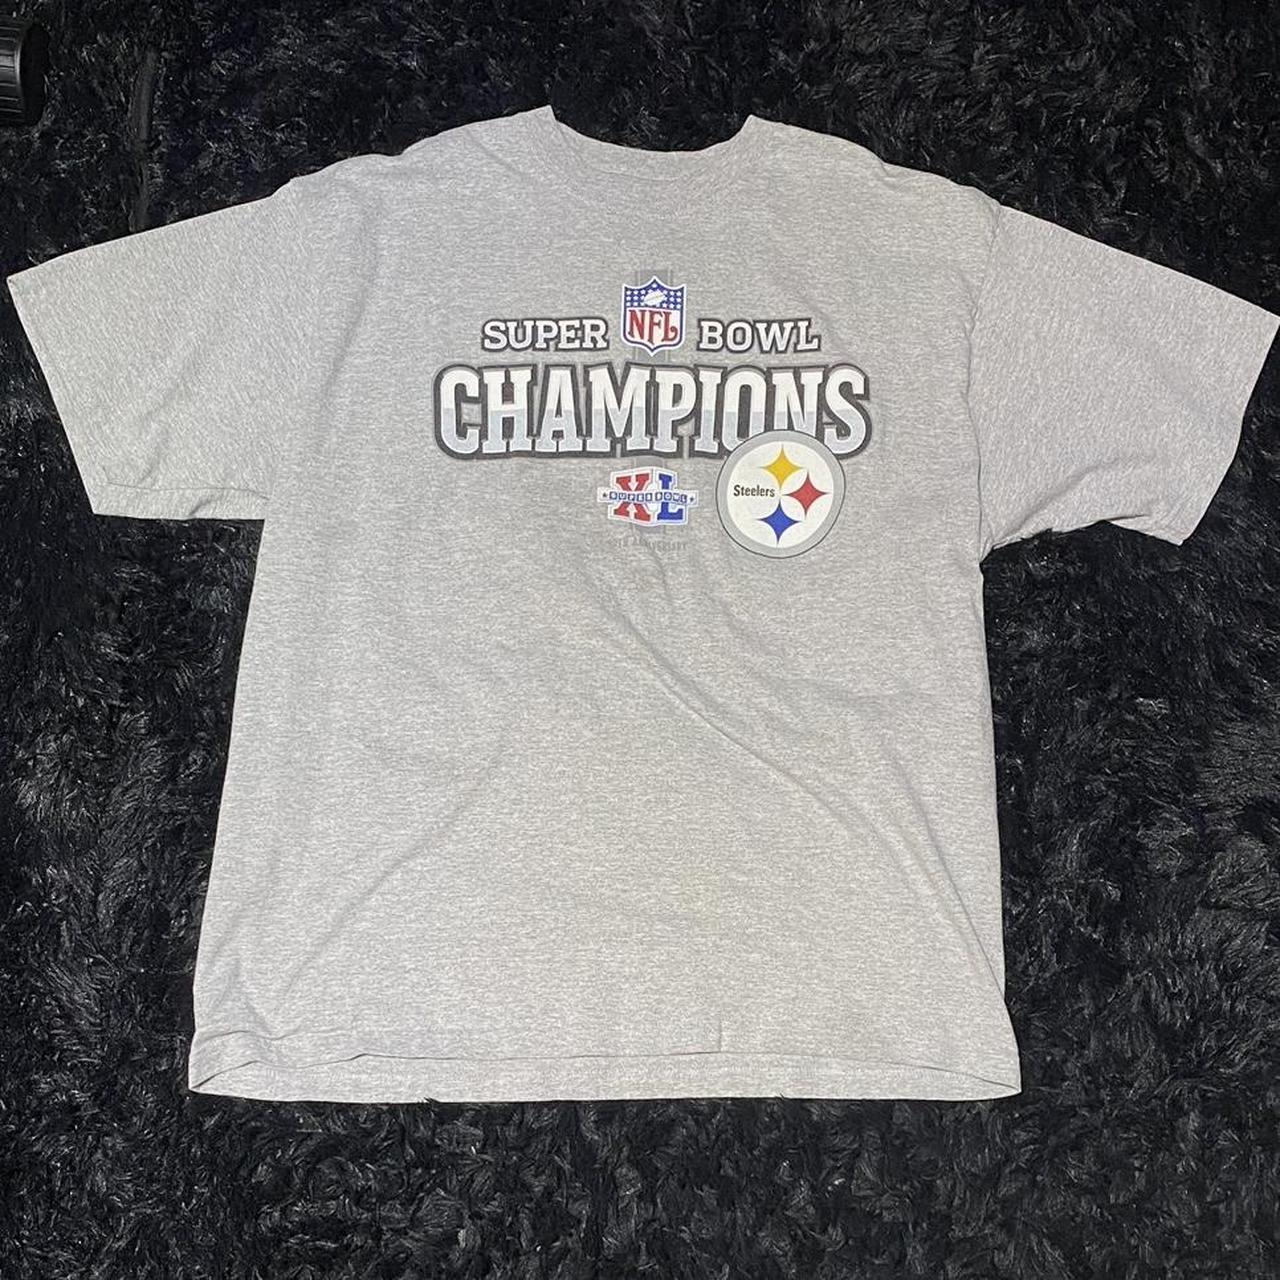 40th Anniversary Super Bowl Champions Steelers shirt - Depop